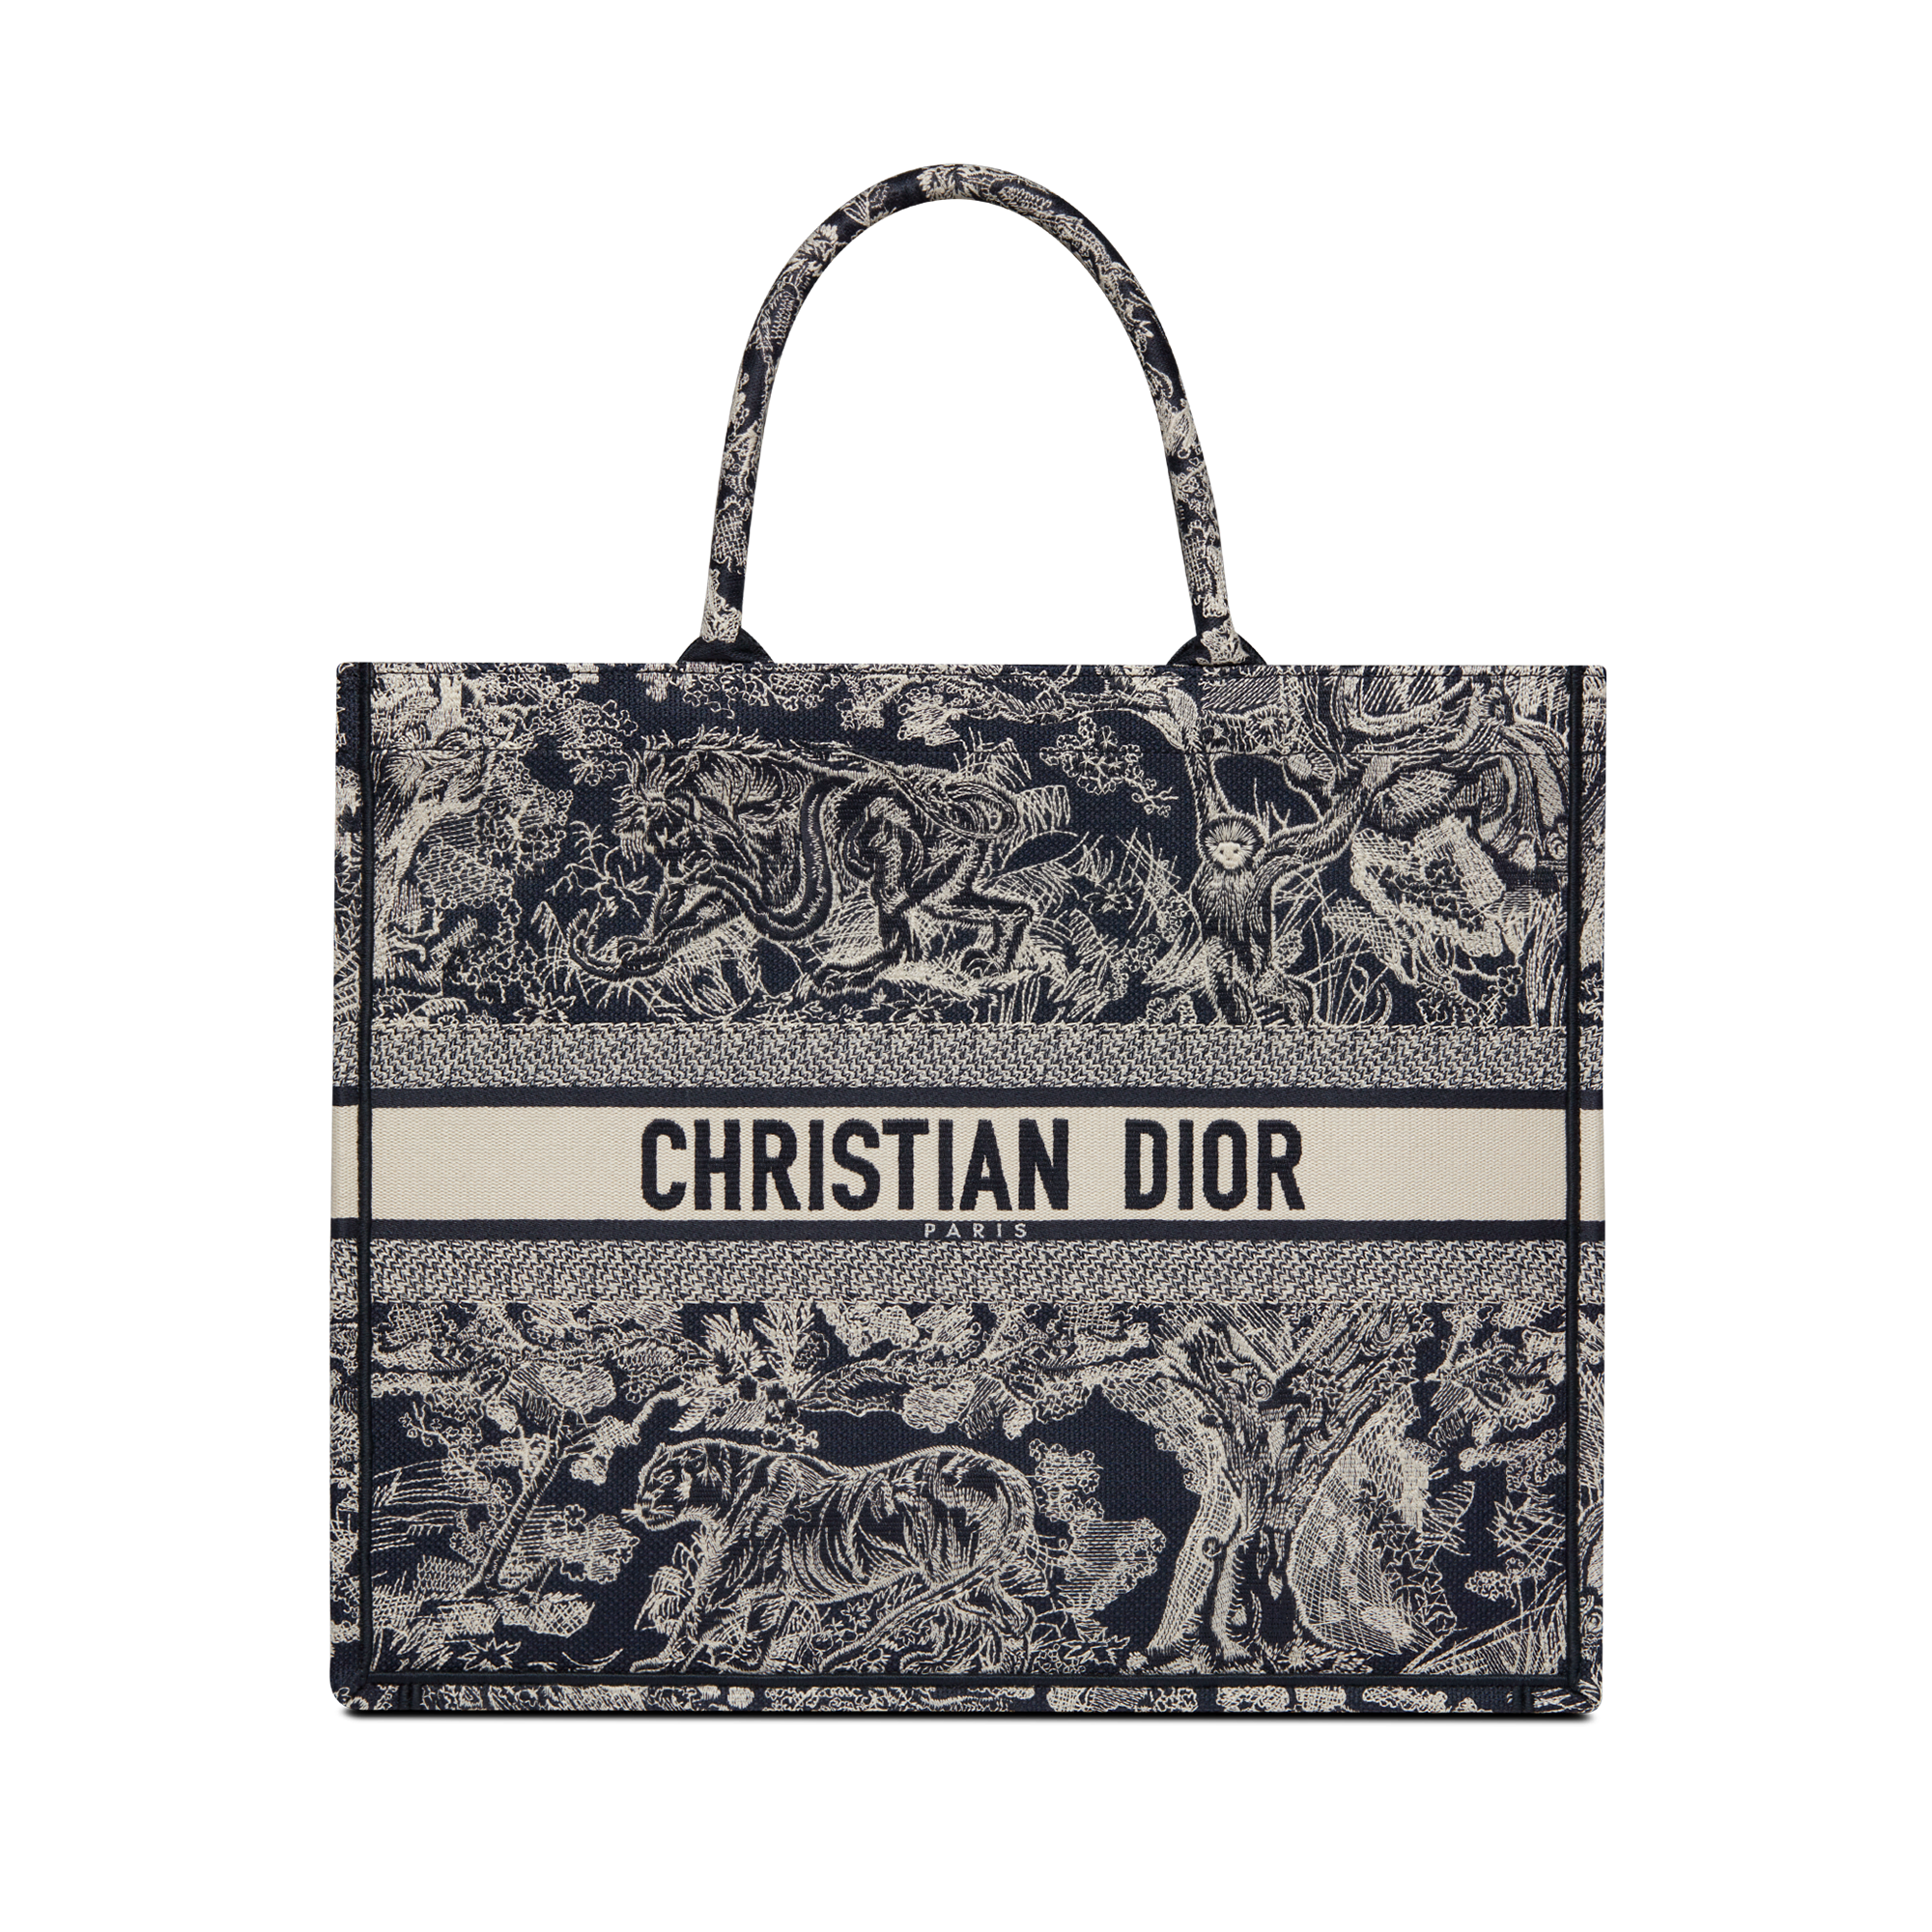 Aランク ディオール ブックトートラージ エンブロイダリー M1286ZRFX 188 レディース Christian Dior